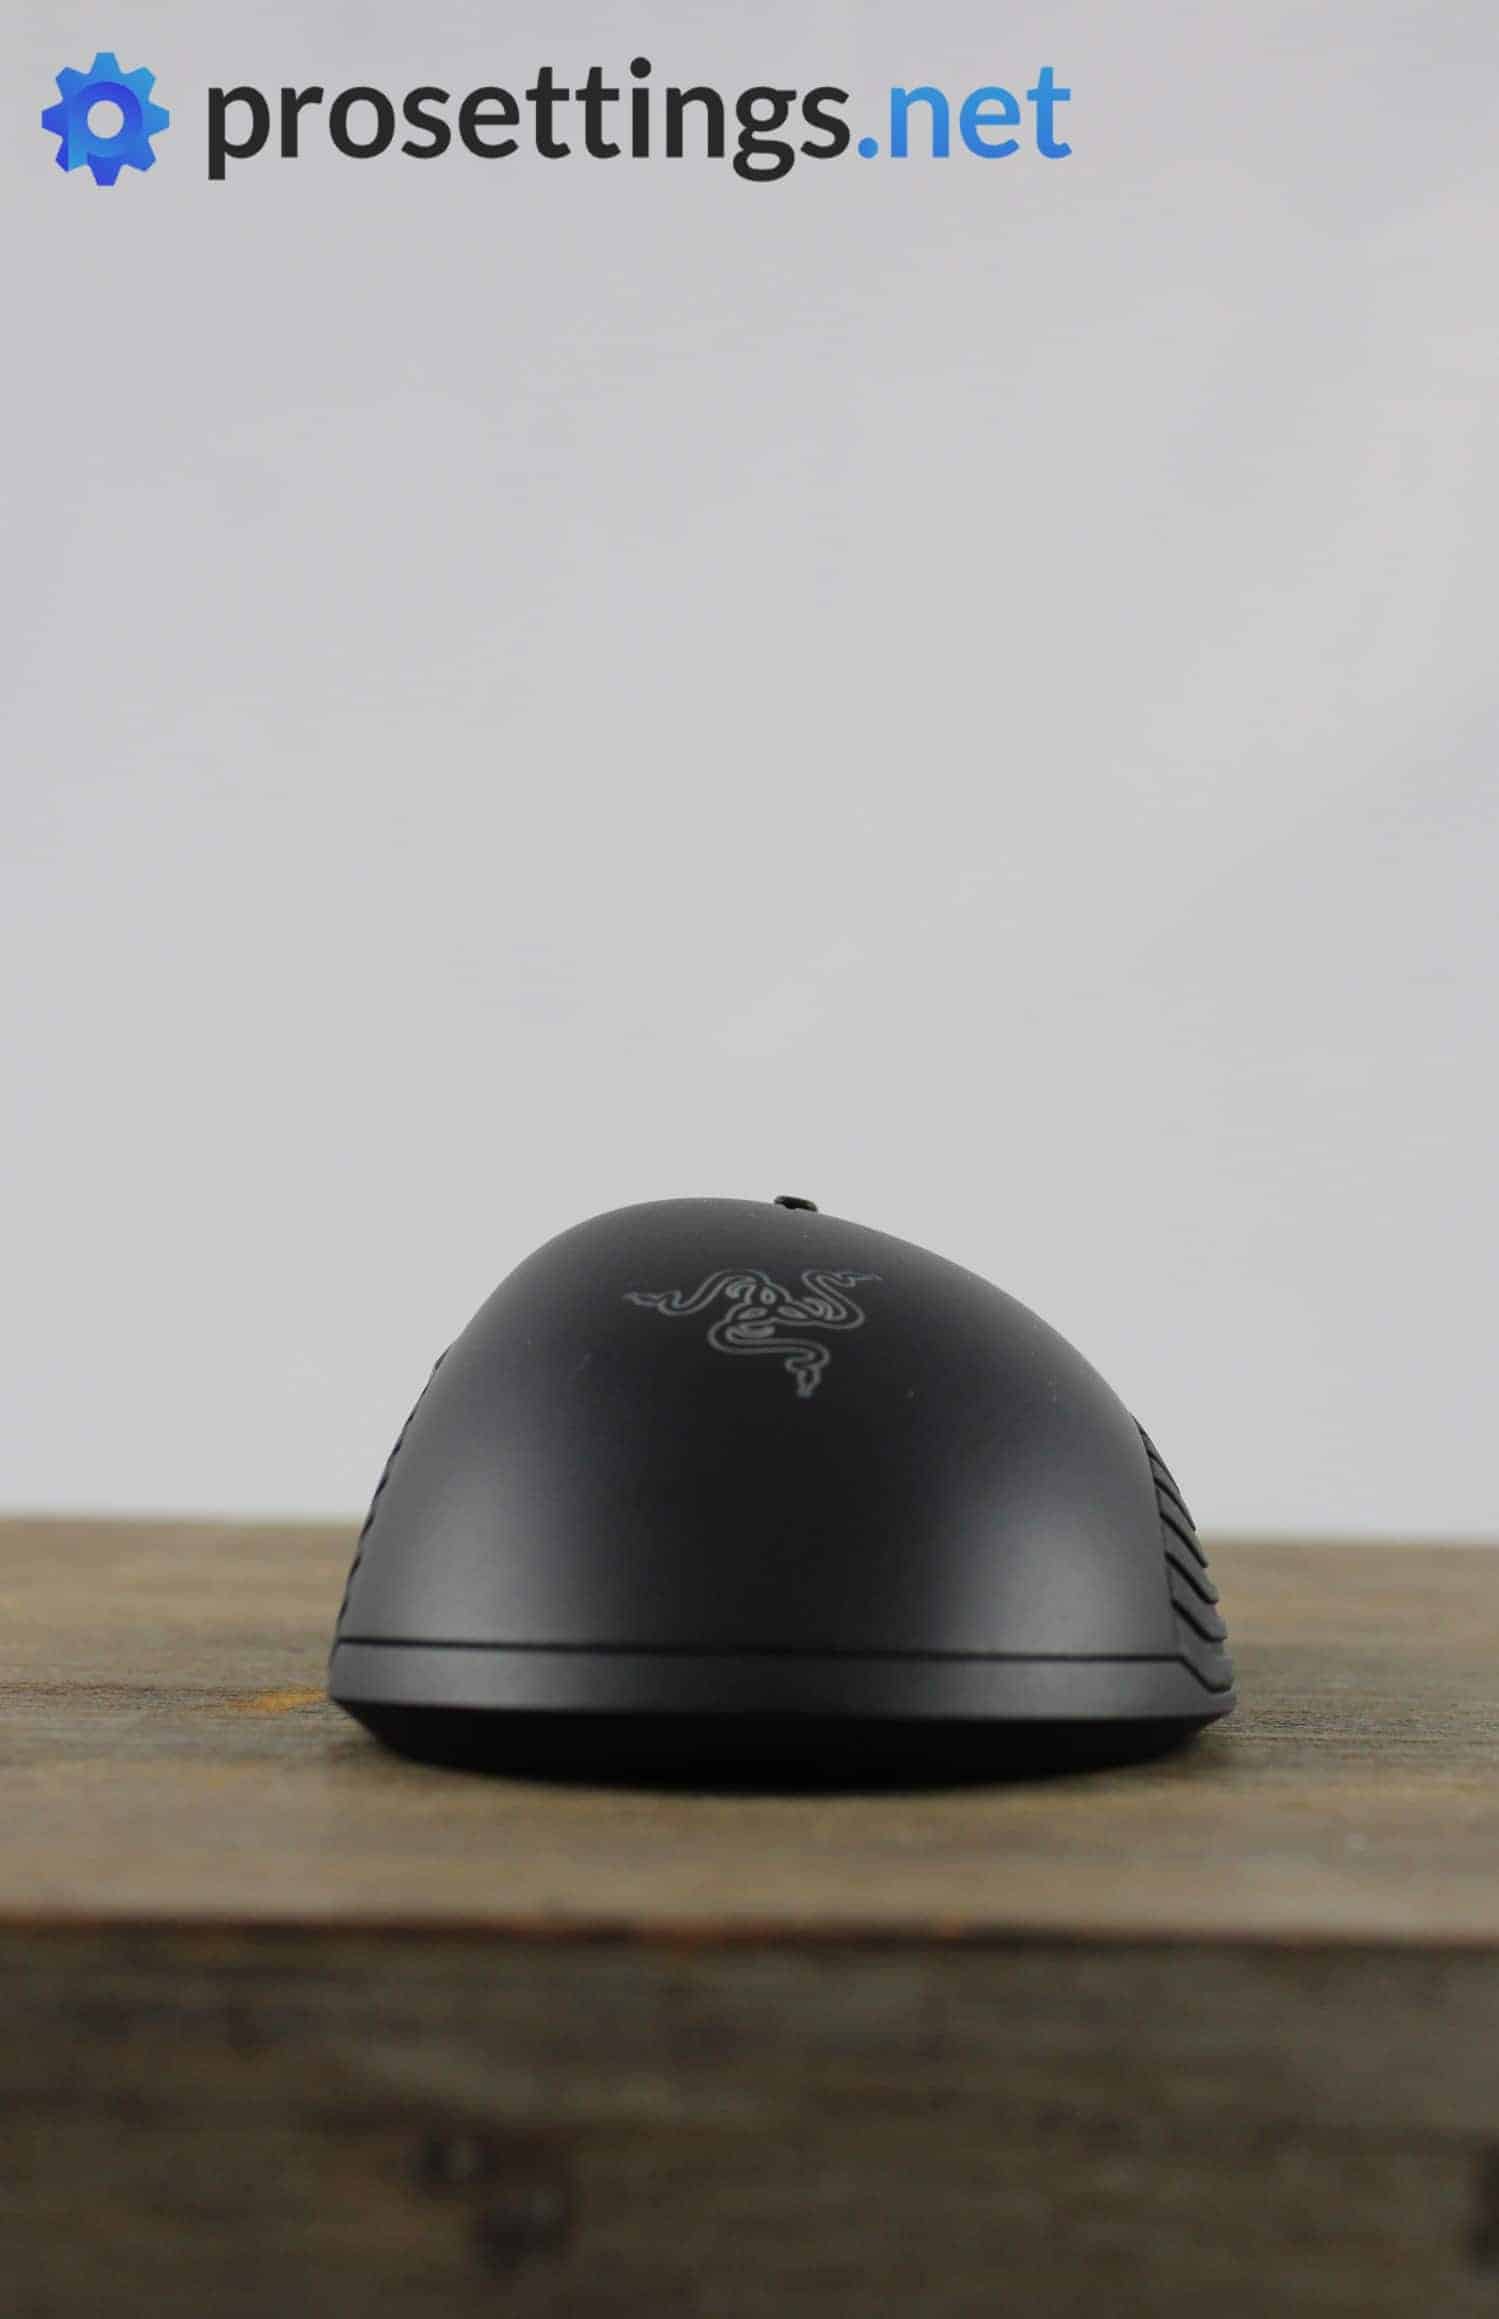 Razer Mamba Wireless Review Mouse